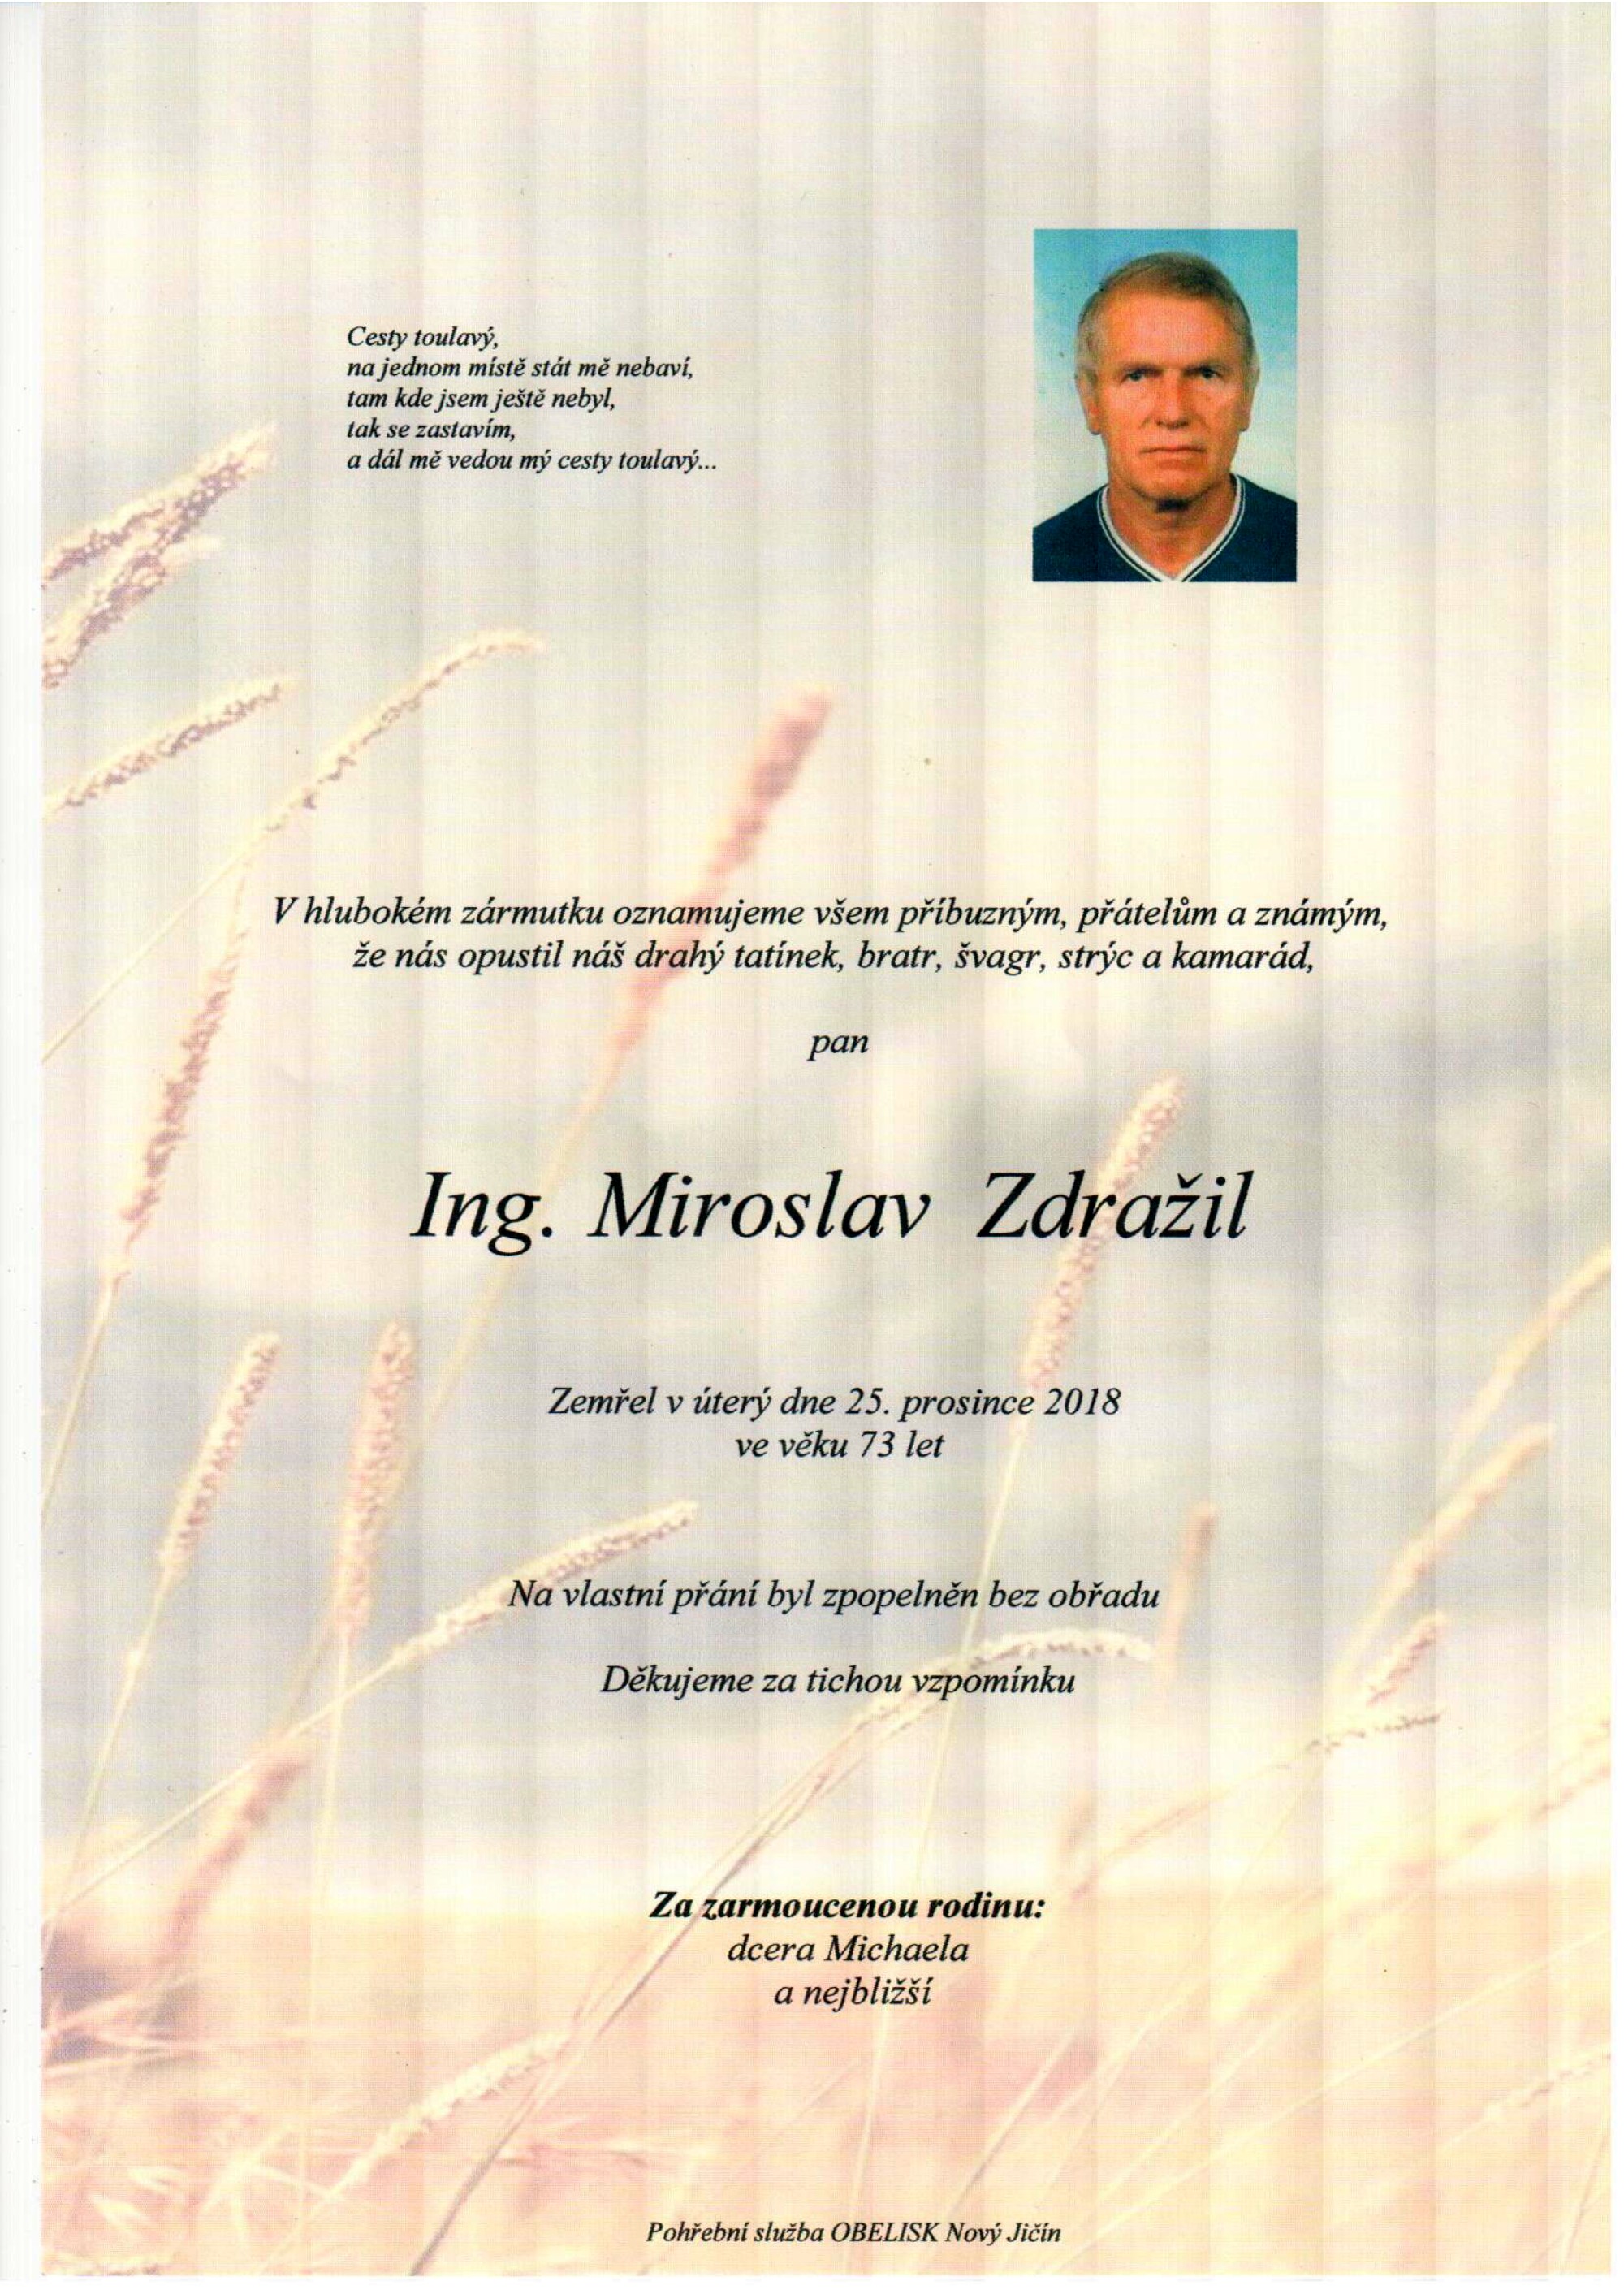 Ing. Miroslav Zdražil